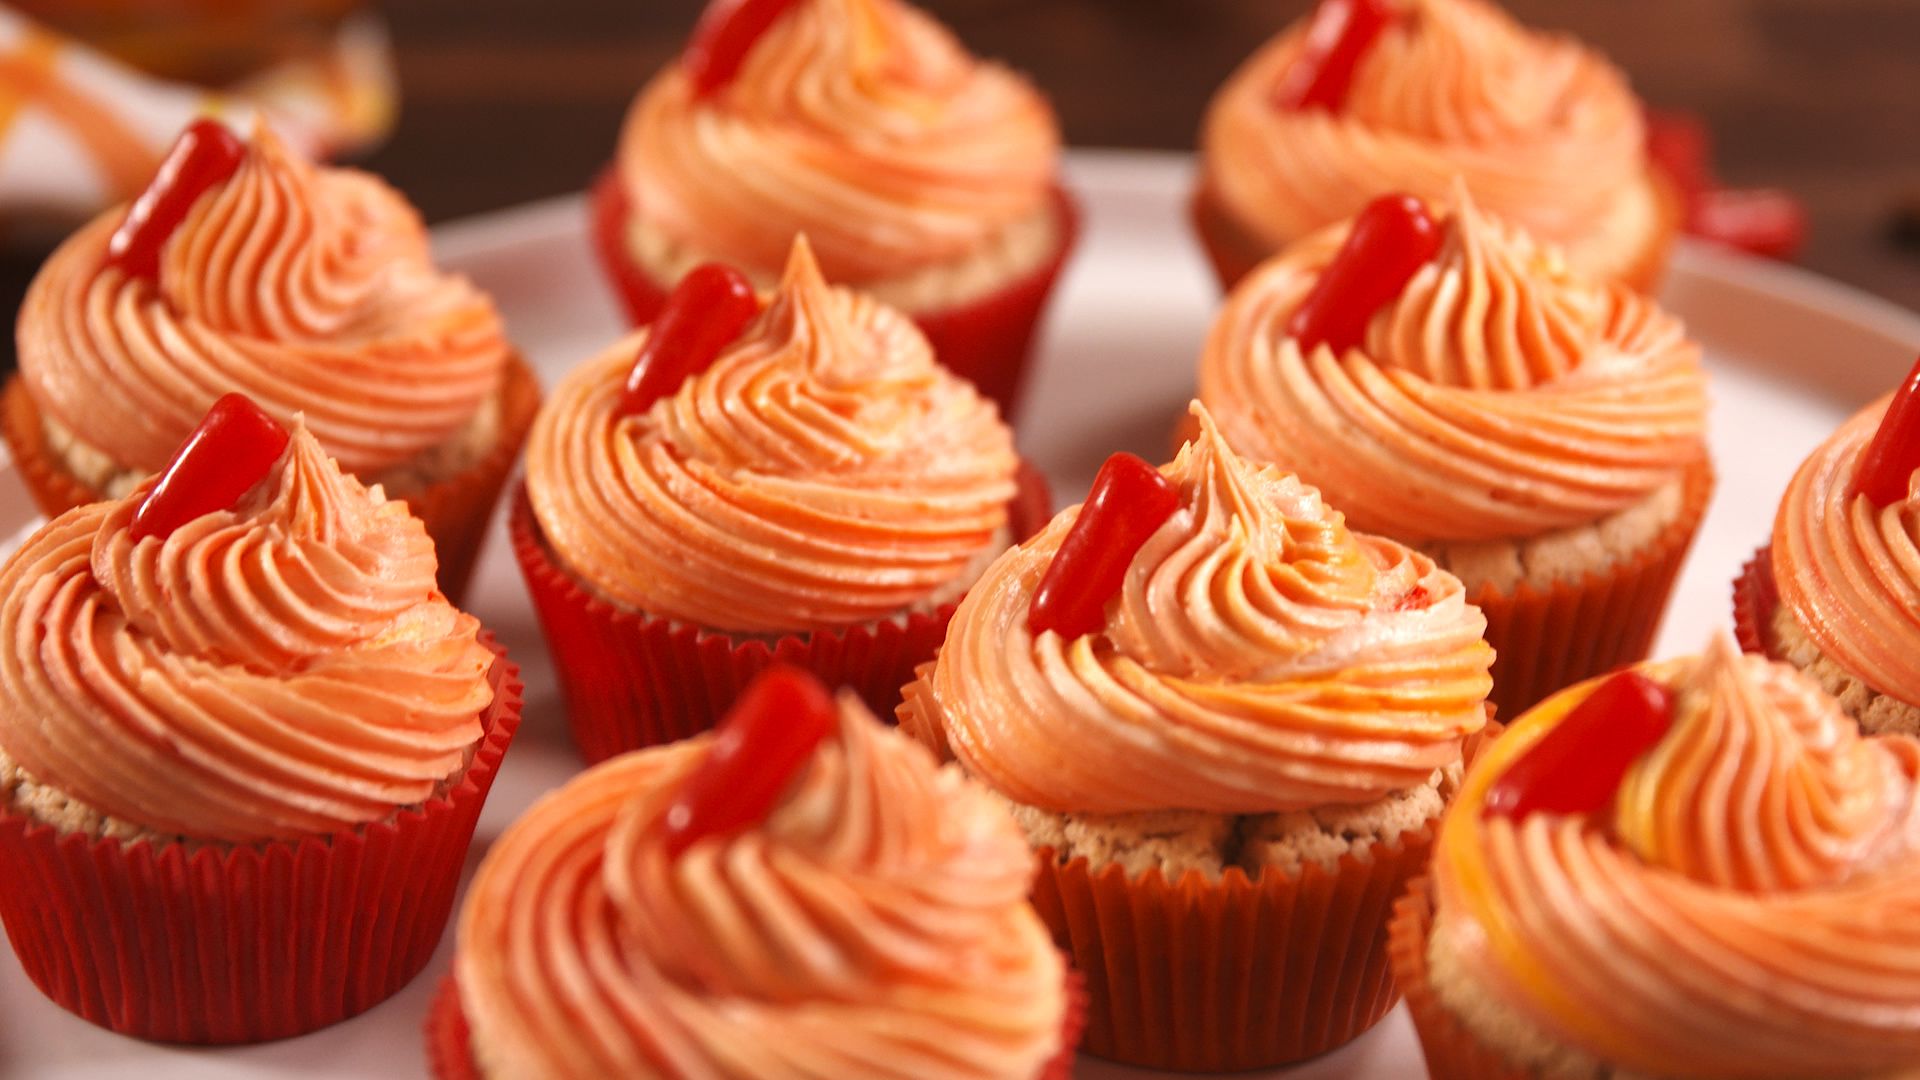 Best Fireball Cupcakes Recipe - How to Make Fireball Cupcakes